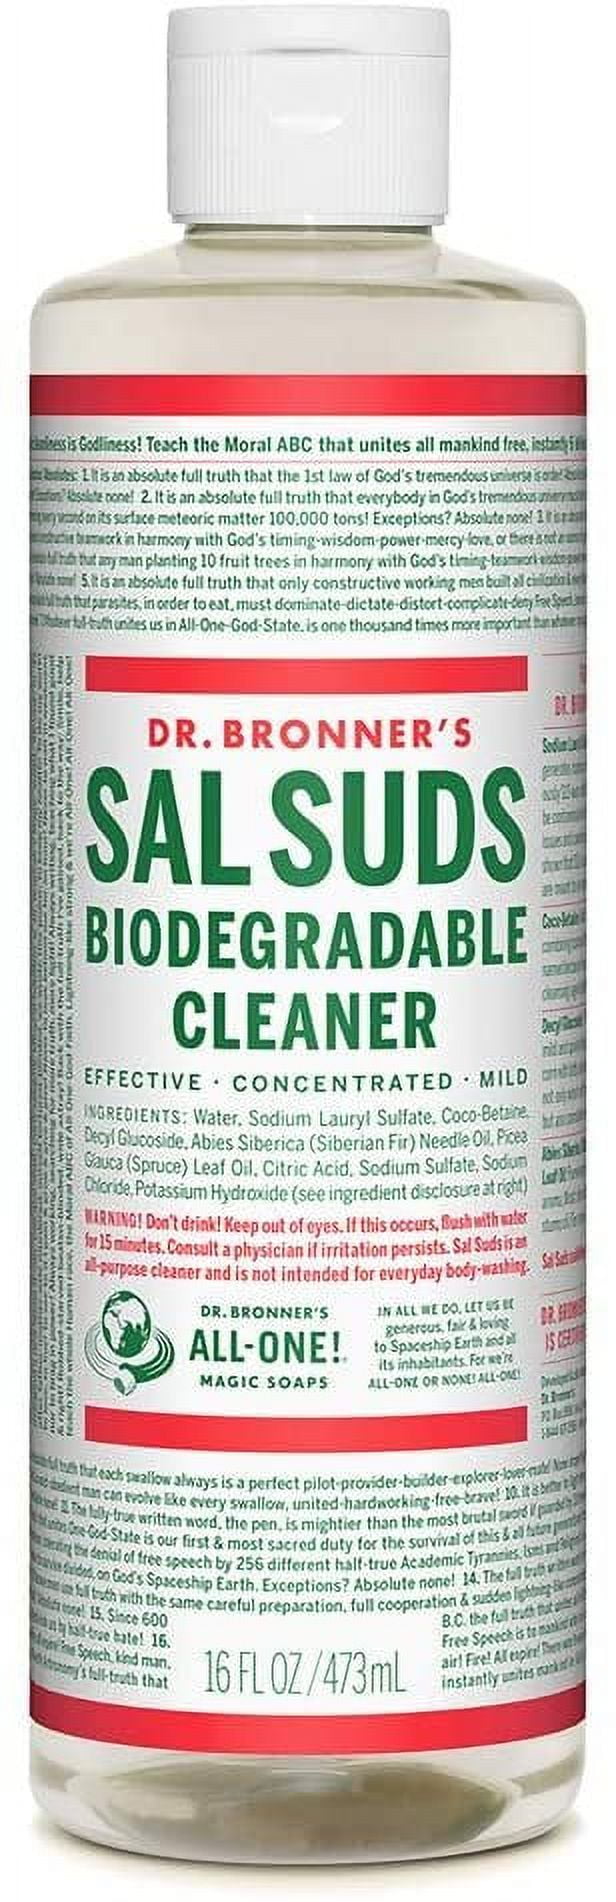 Dr. Bronner's Sal Suds Biodegradable Cleaner - 16 fl oz (473 ml) 